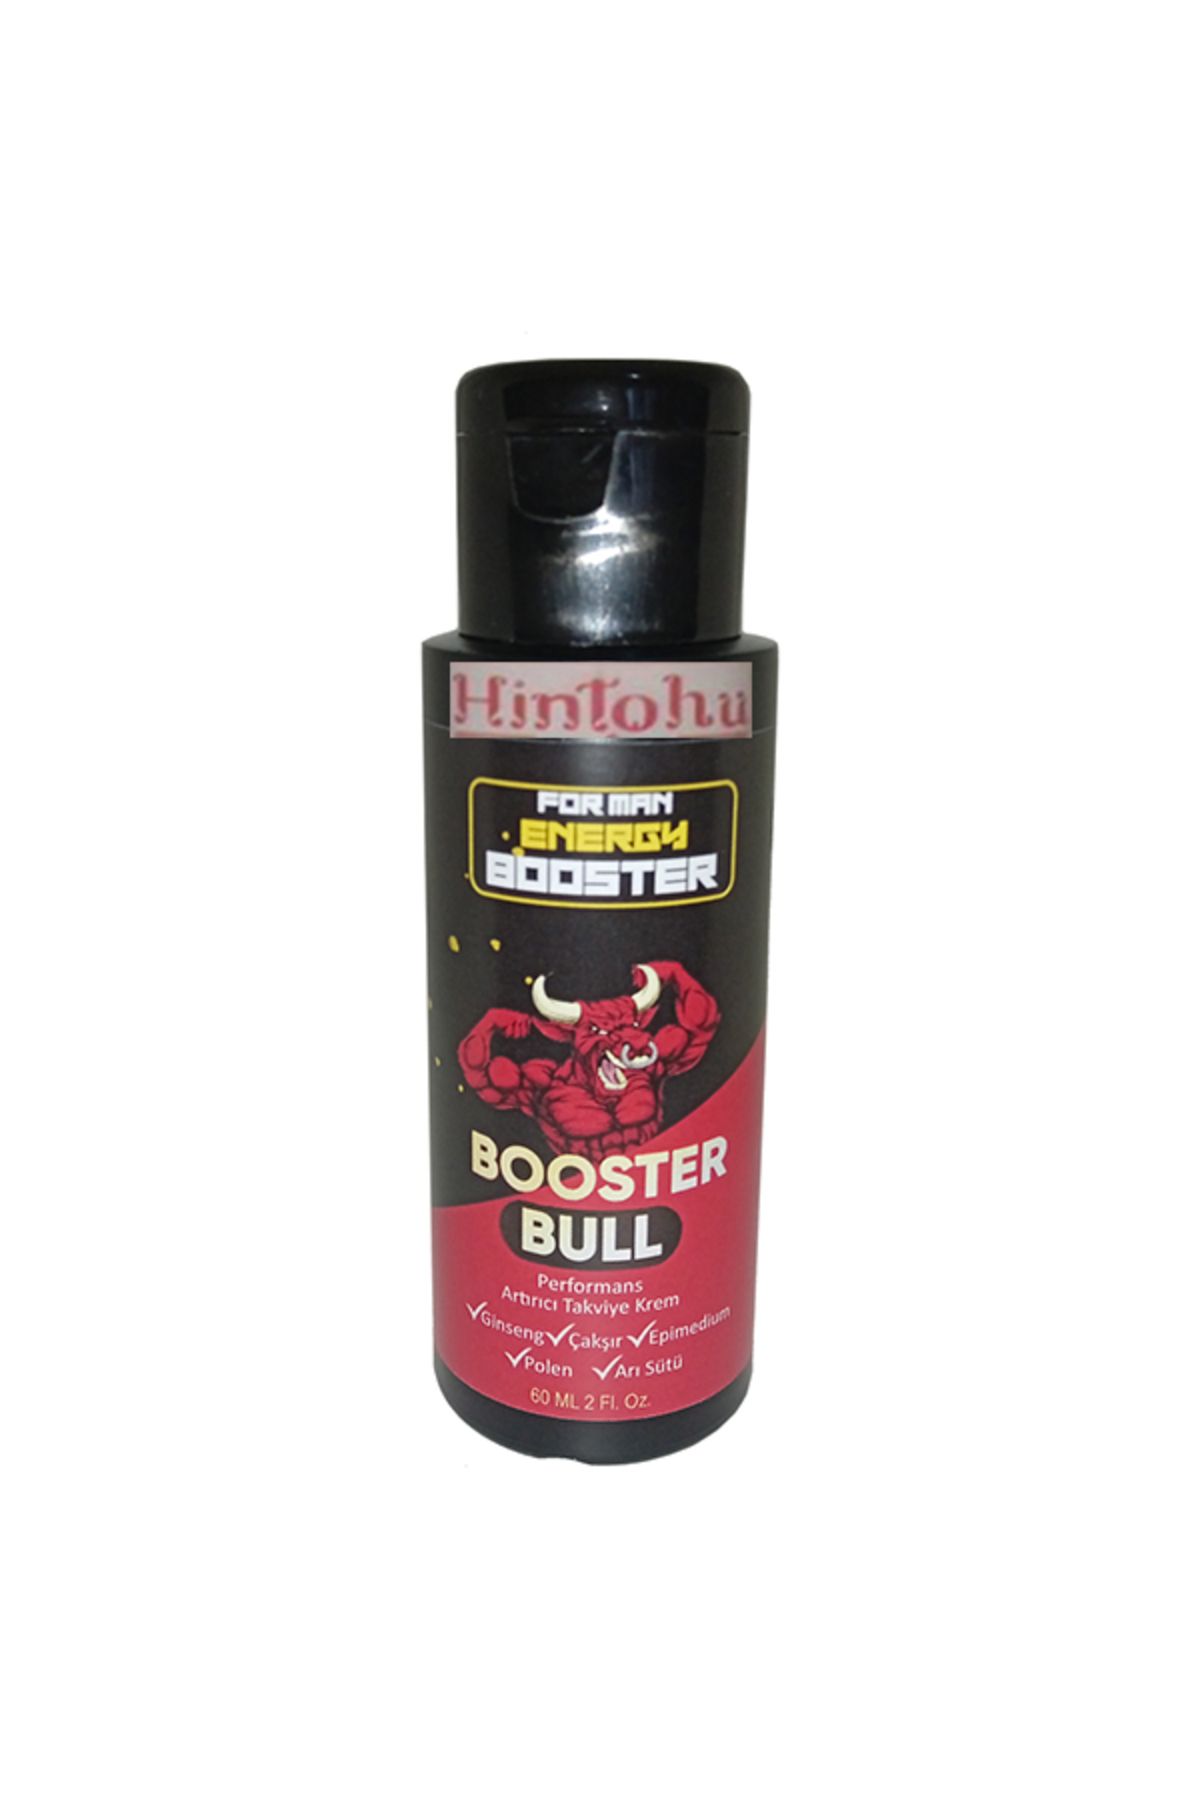 HİNTOHU Booster Bull  kremi / Booster Bull male  cream 60 ml x 1 ad.